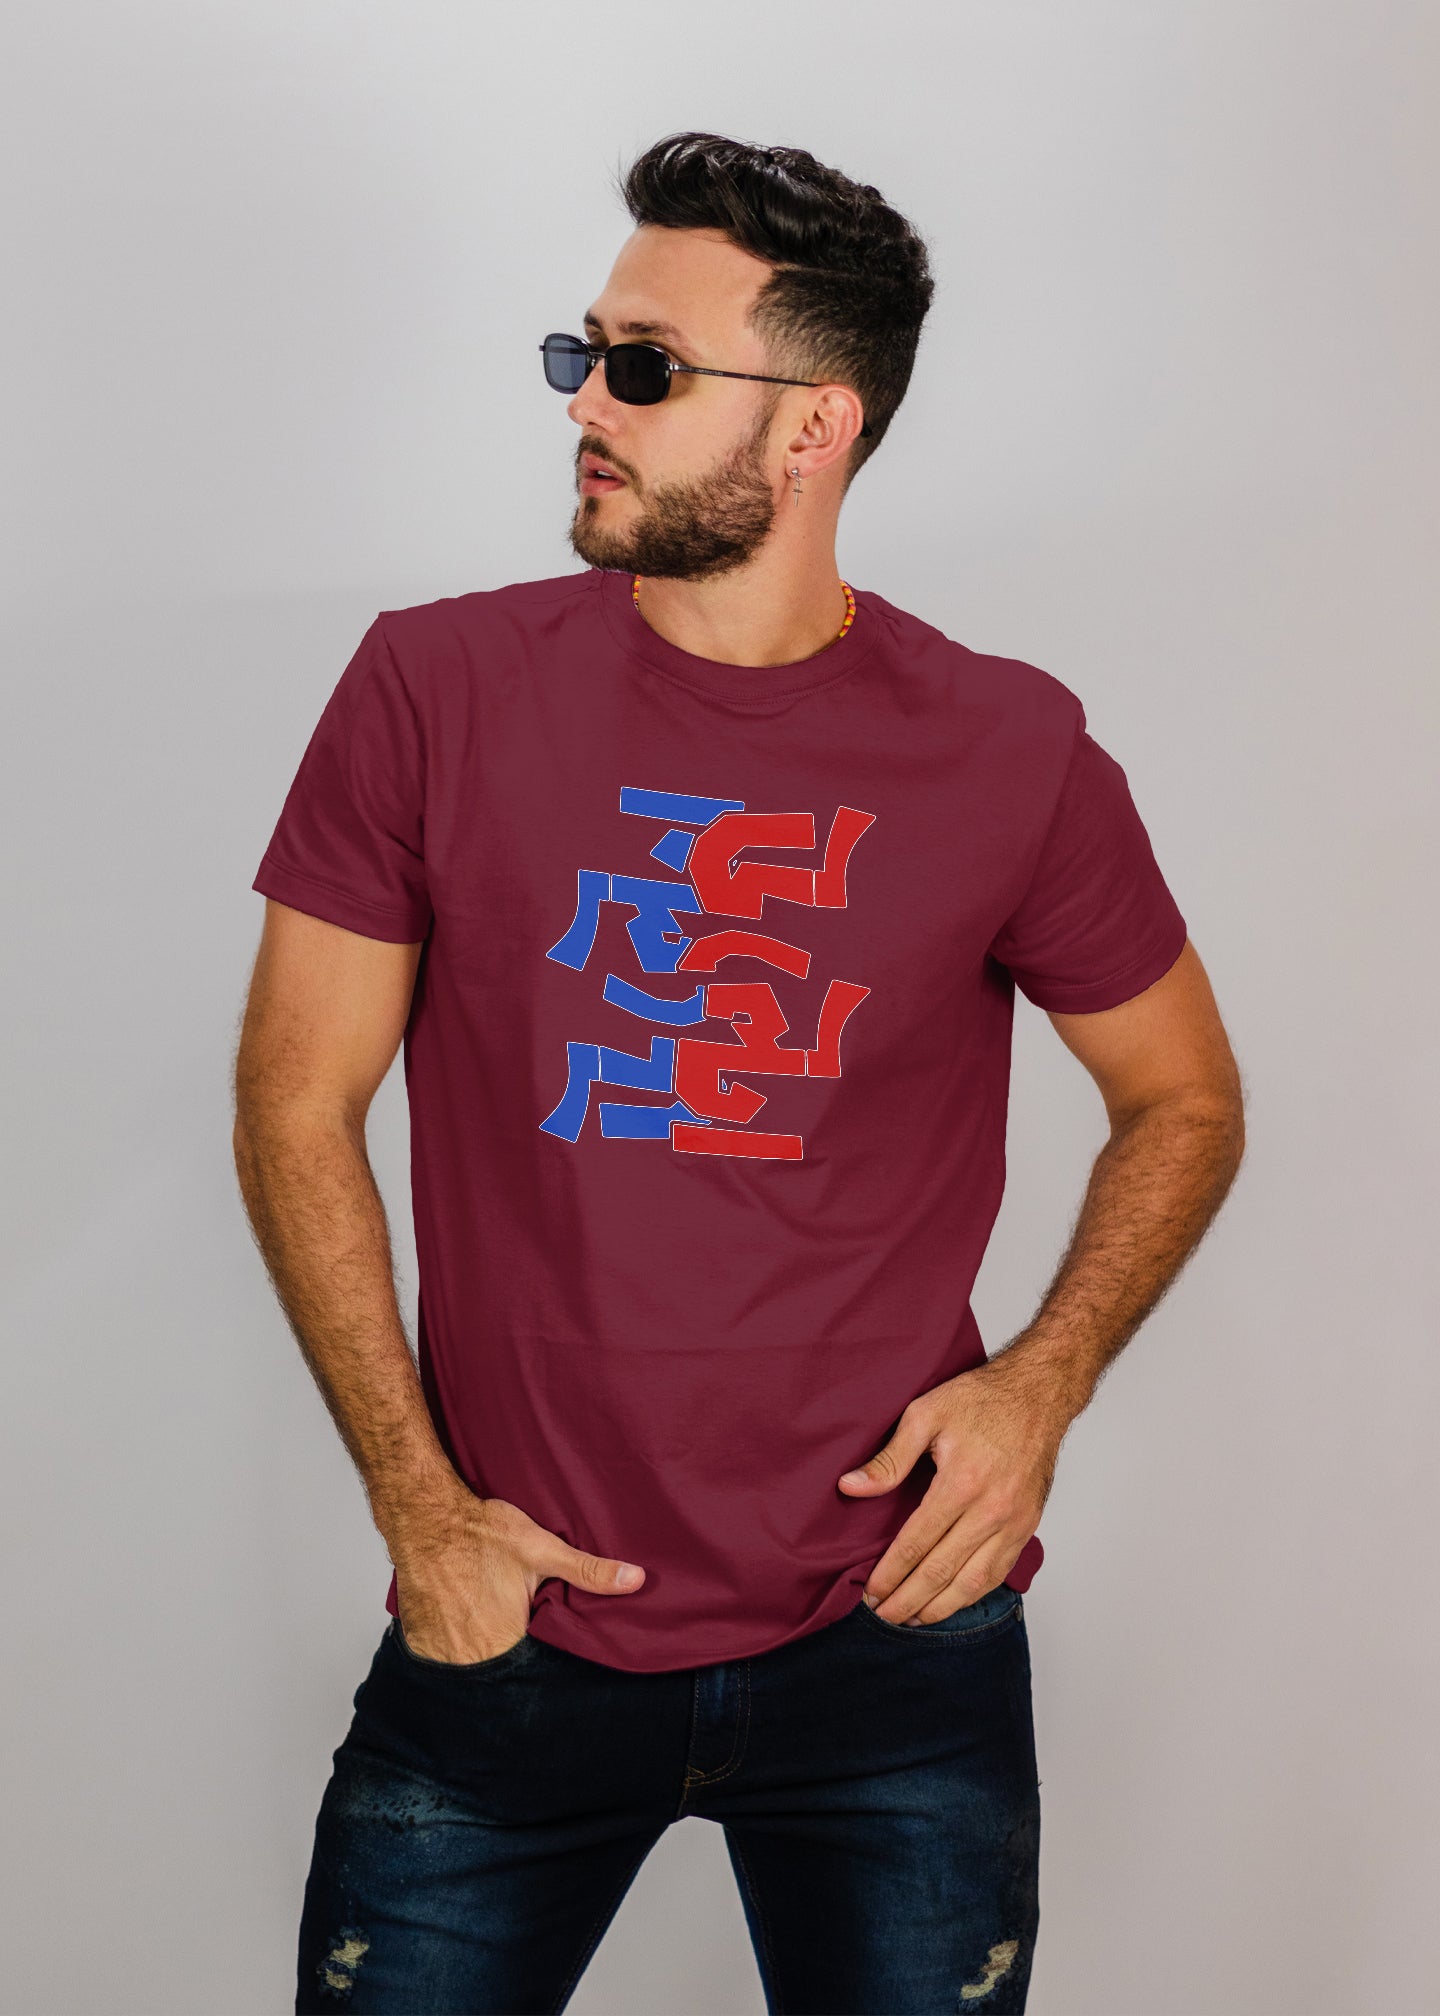 Ulto caligraphy Printed Half Sleeve Premium Cotton T-shirt For Men